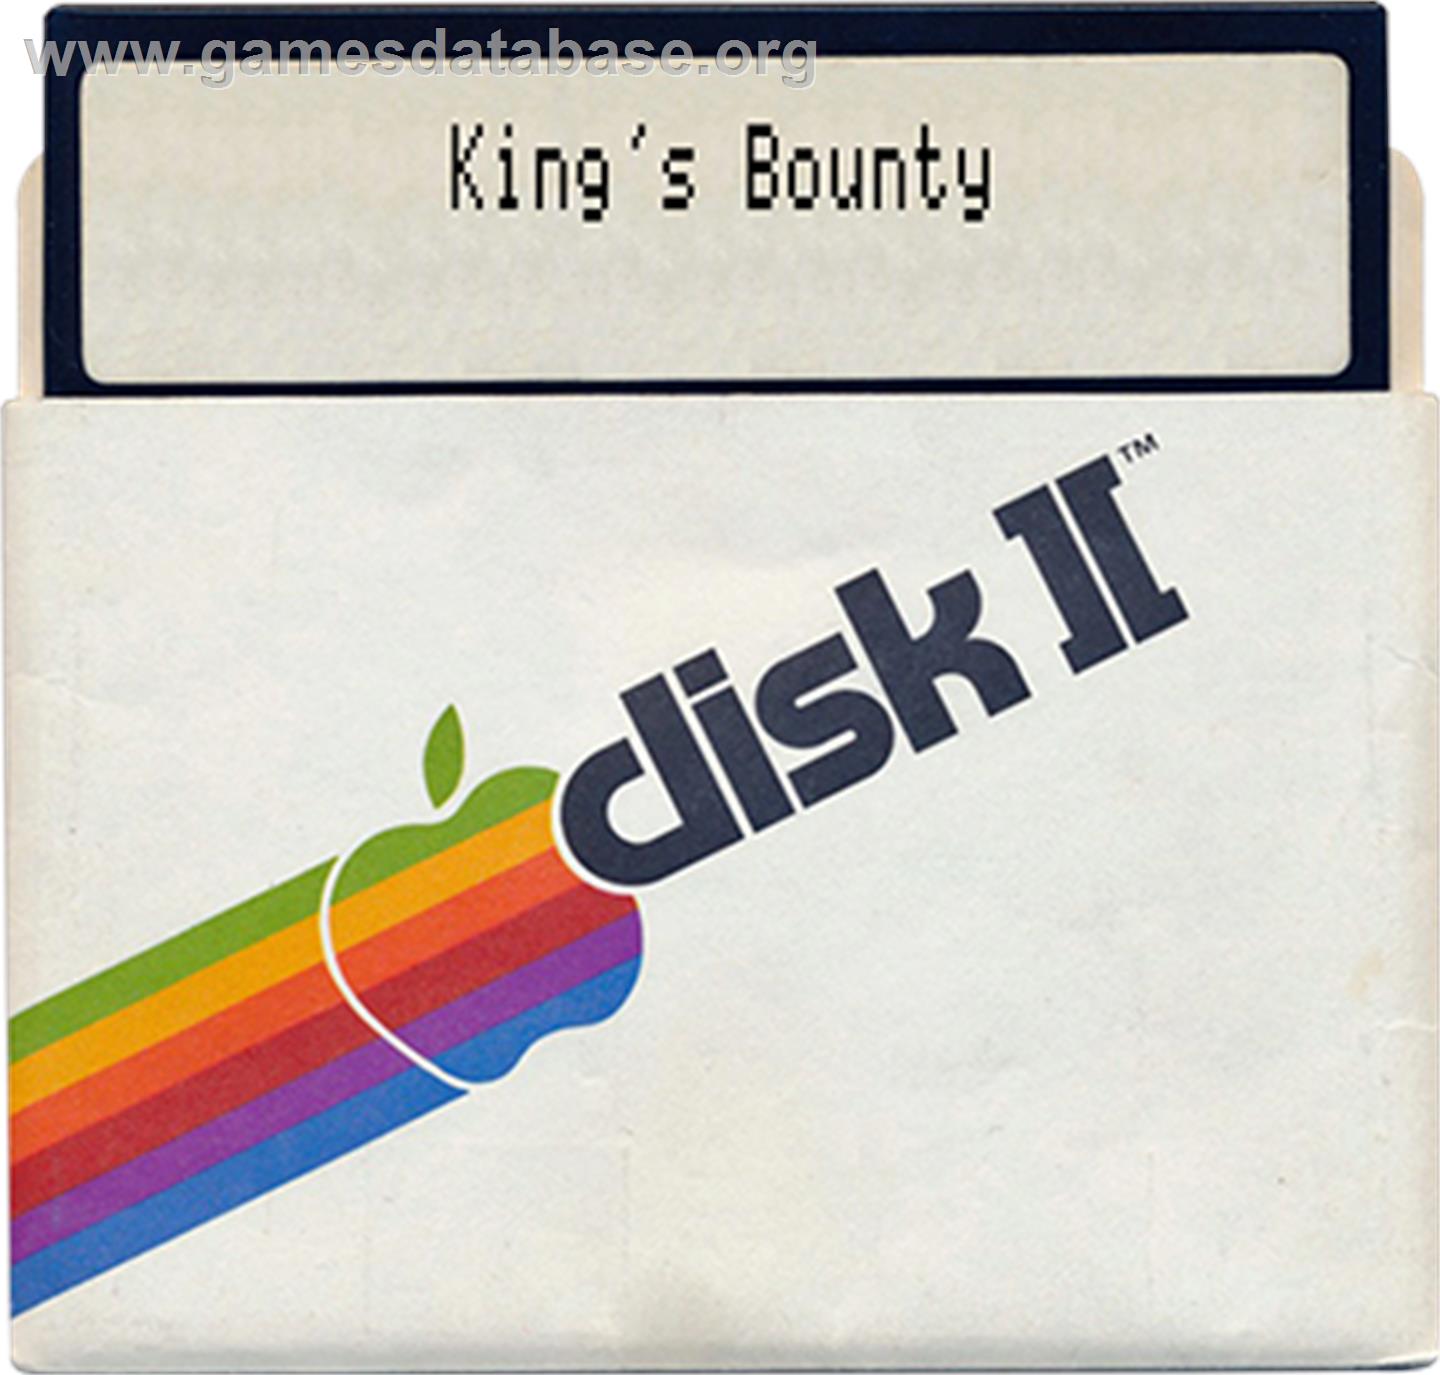 King's Bounty - Apple II - Artwork - Disc